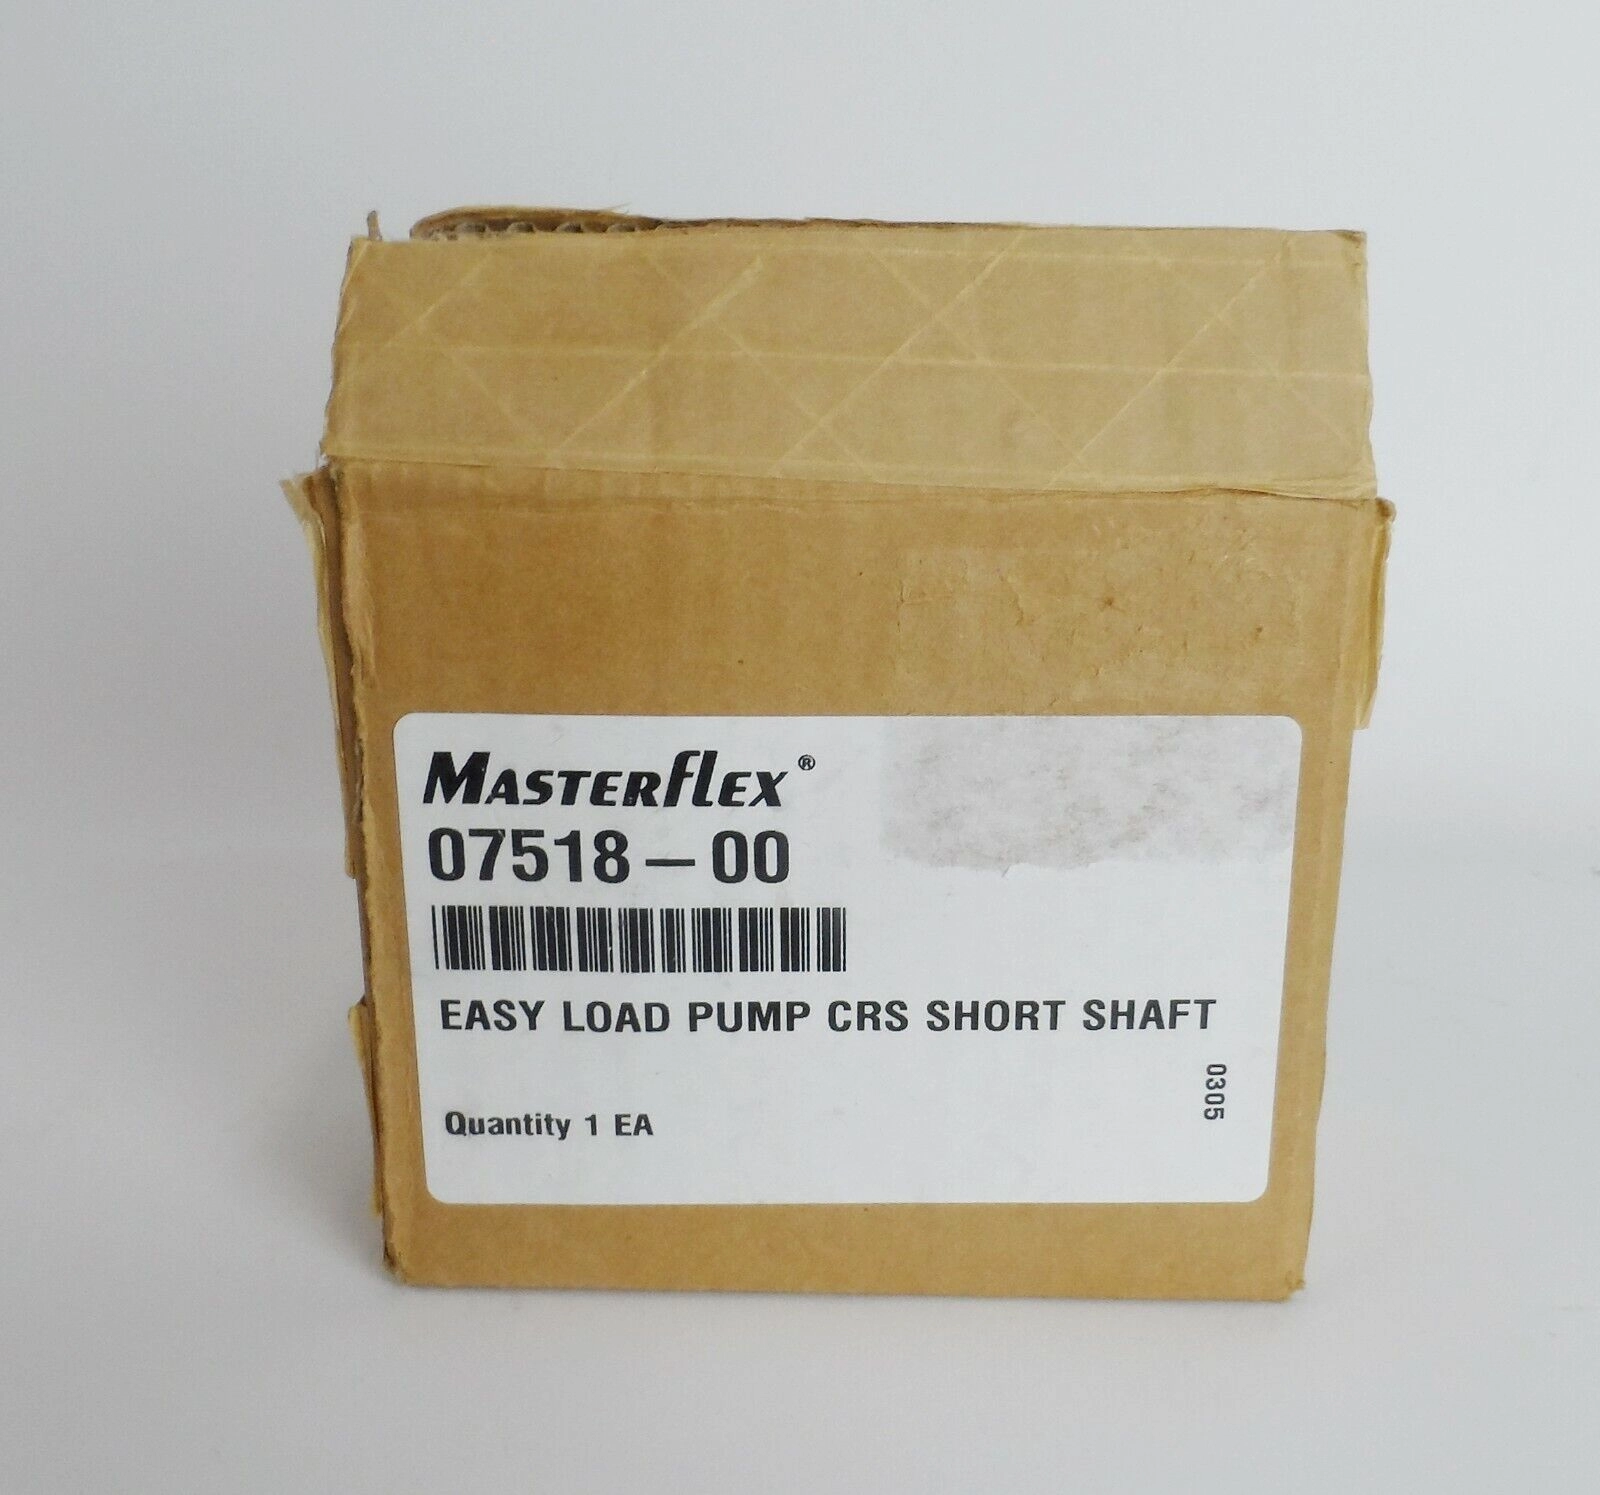 Masterflex Easy Load Pump CRS Short Shaft 07518-00